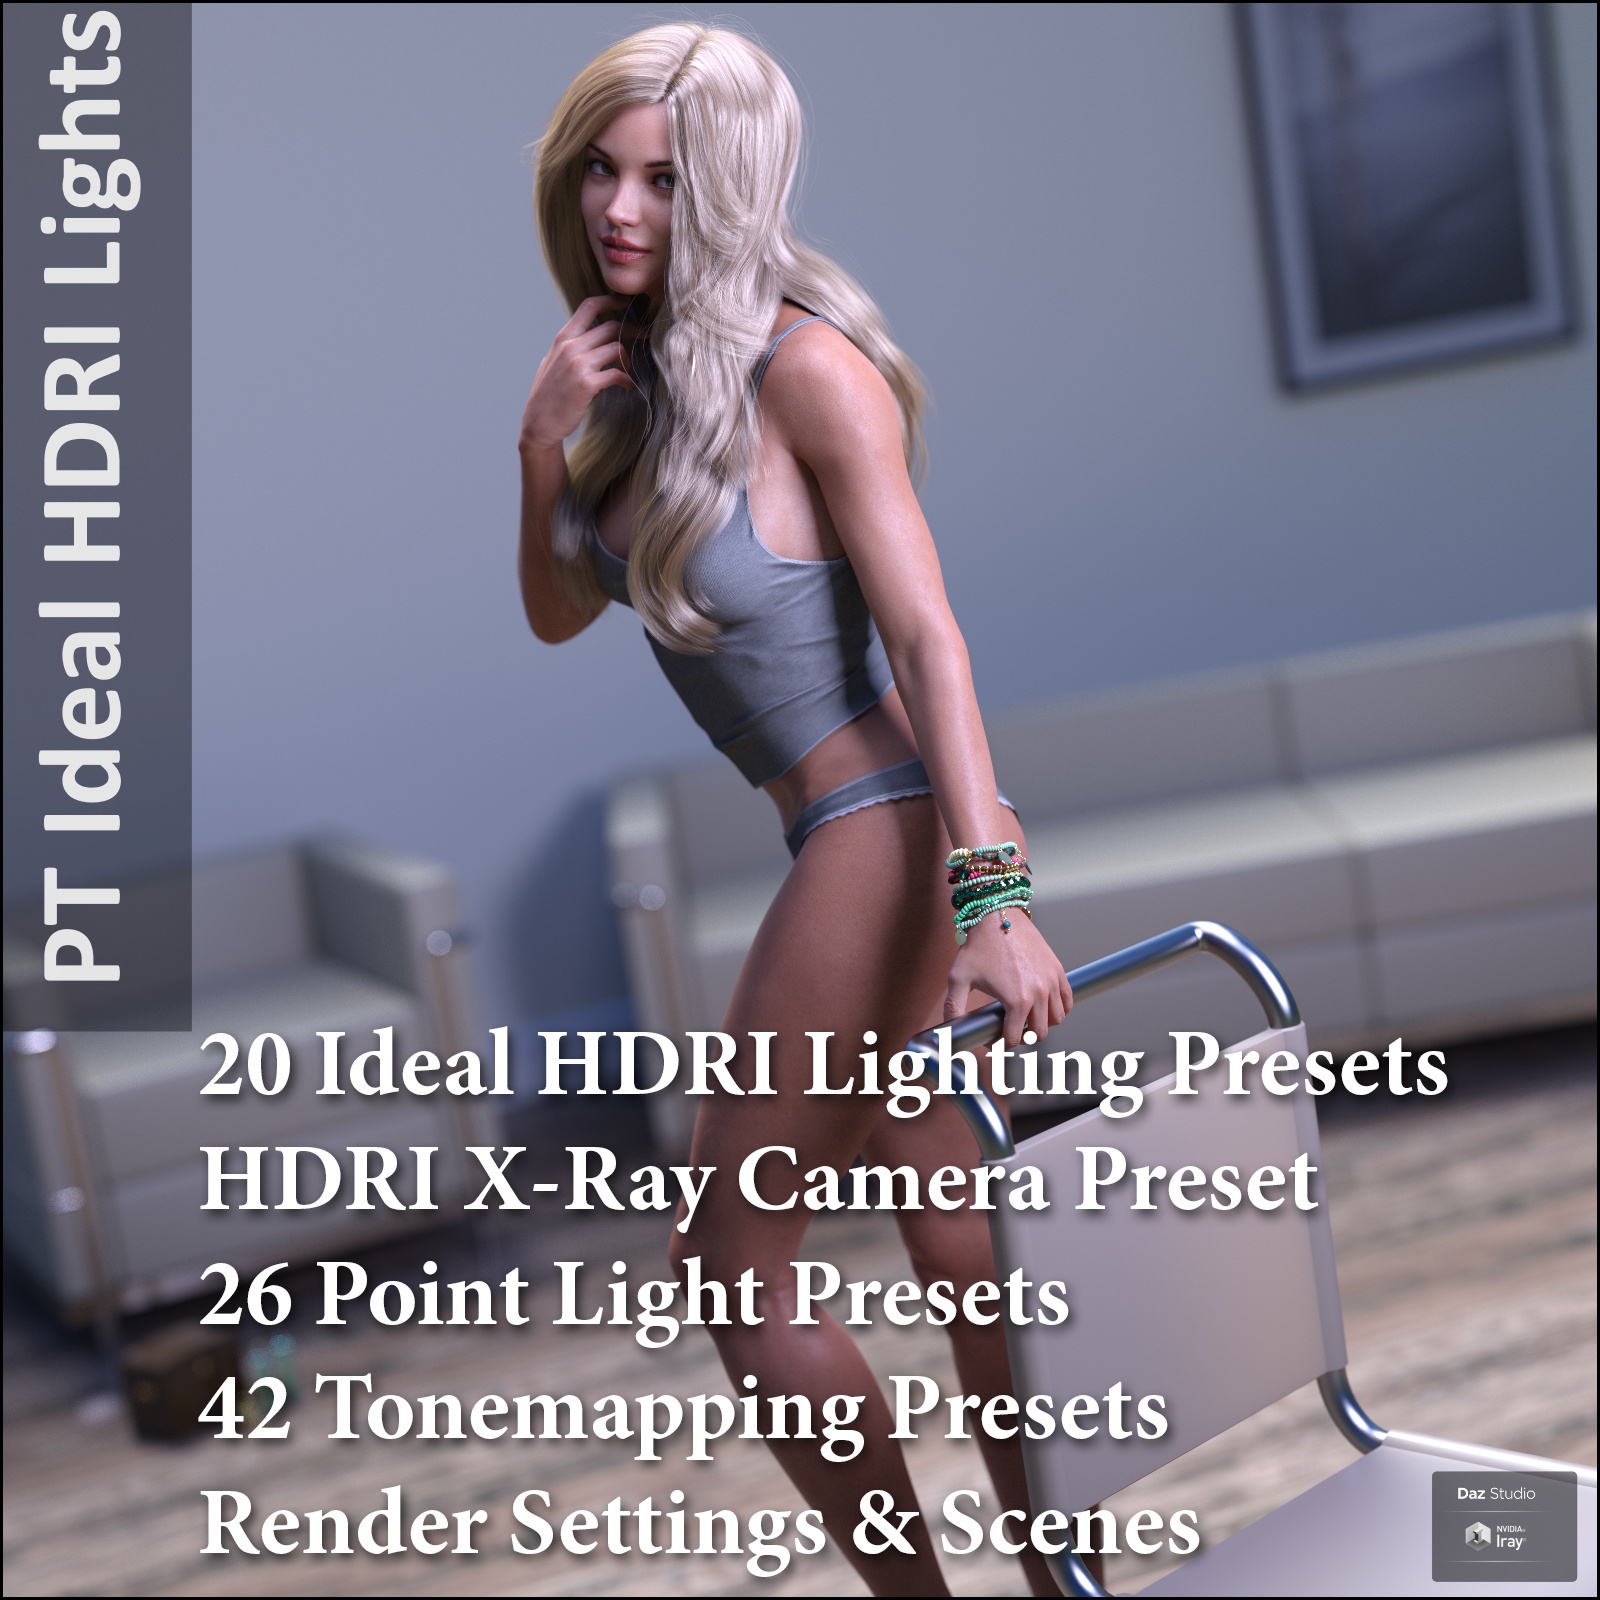 paper-tiger’s-ideal-hdri-lights